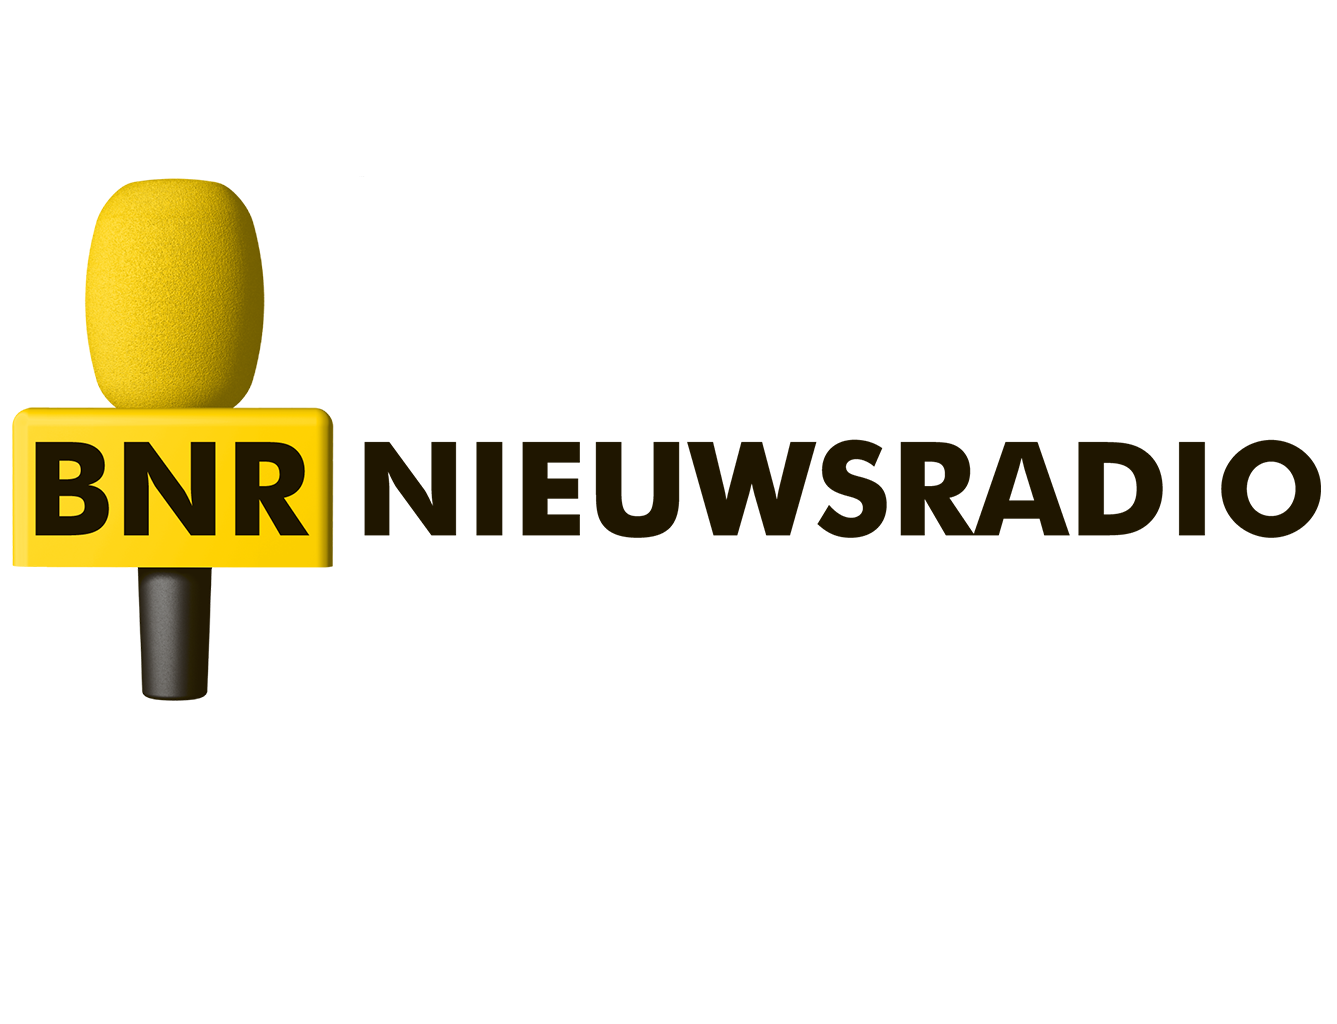 BNR Nieuwsradio New Horizon Michel Baars